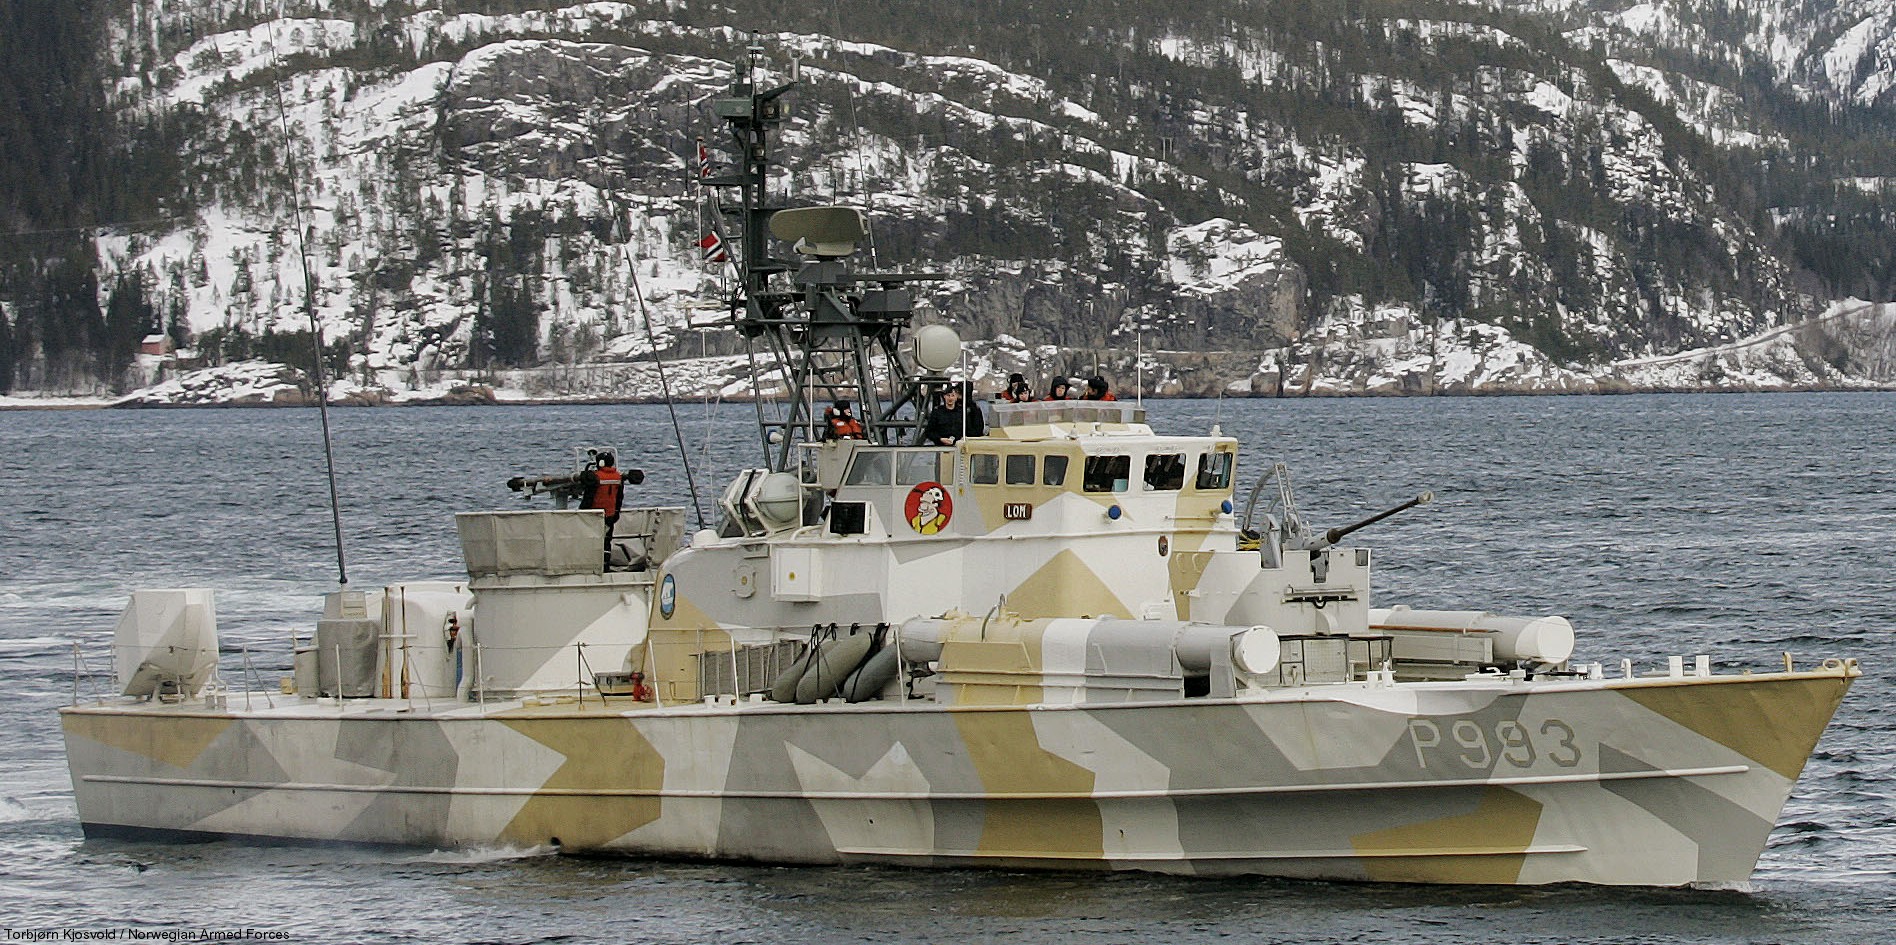 p-993 knm lom hauk class fast attack missile torpedo craft boat norwegian navy sjøforsvaret 04